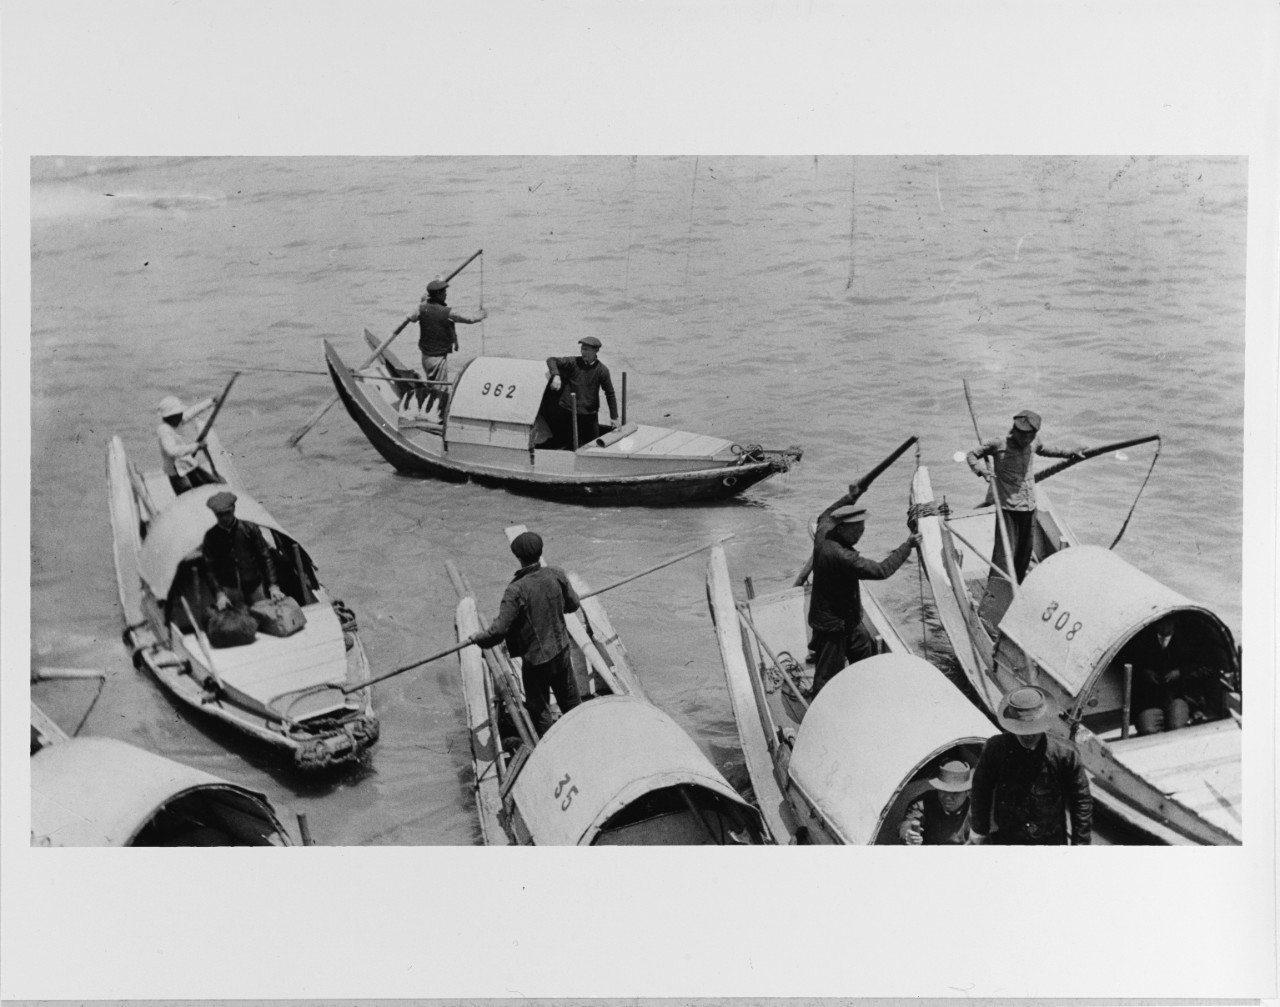 View of sampans in the Whangpoo River, Shanghai, China, circa 1912